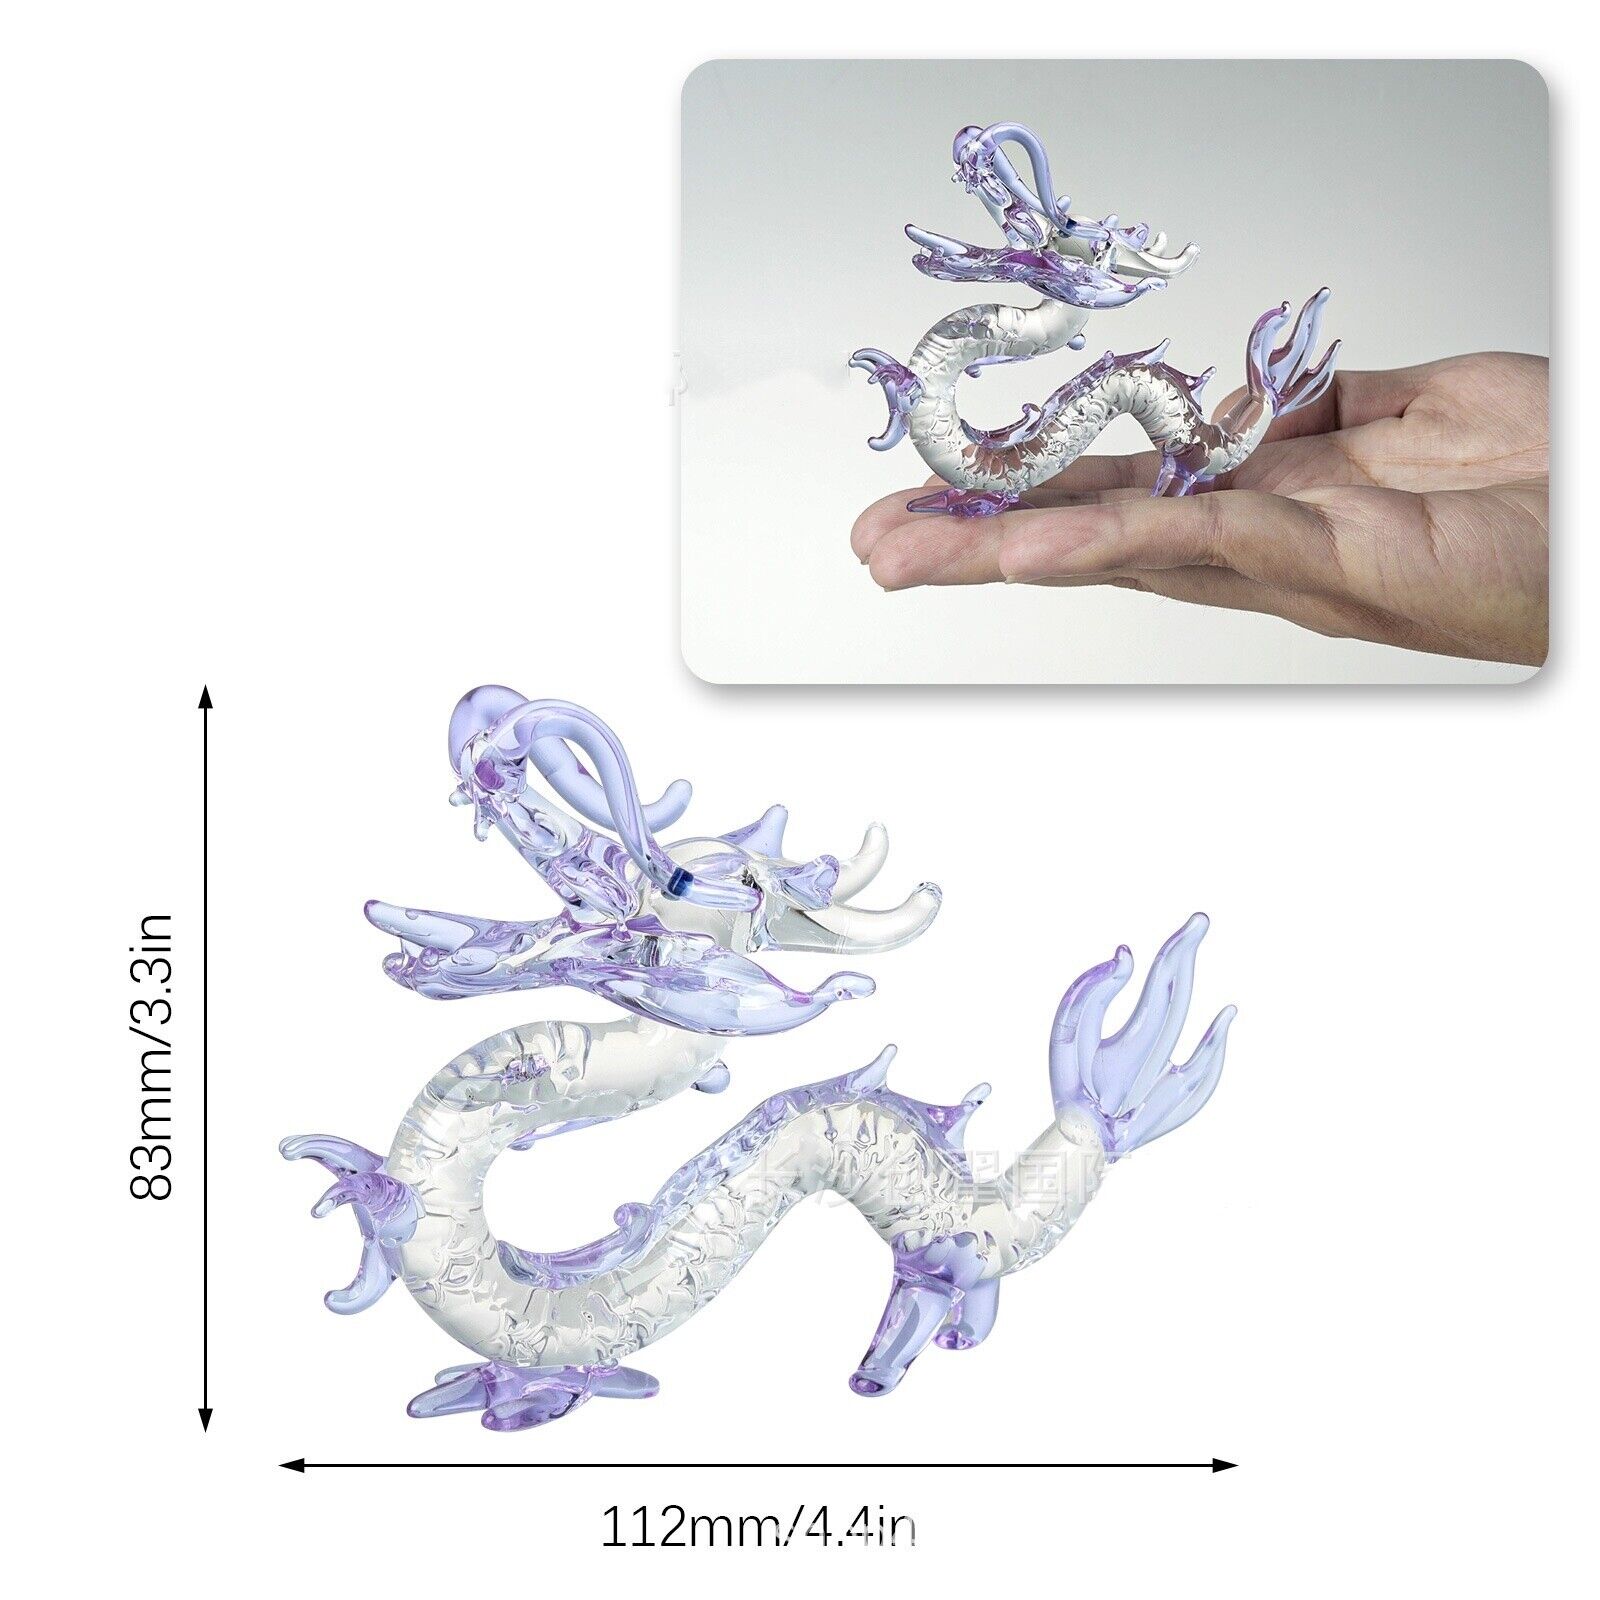 Color Crystal Dragon Figurine Collectible Hand Blown Glass Animal Ornament Gift